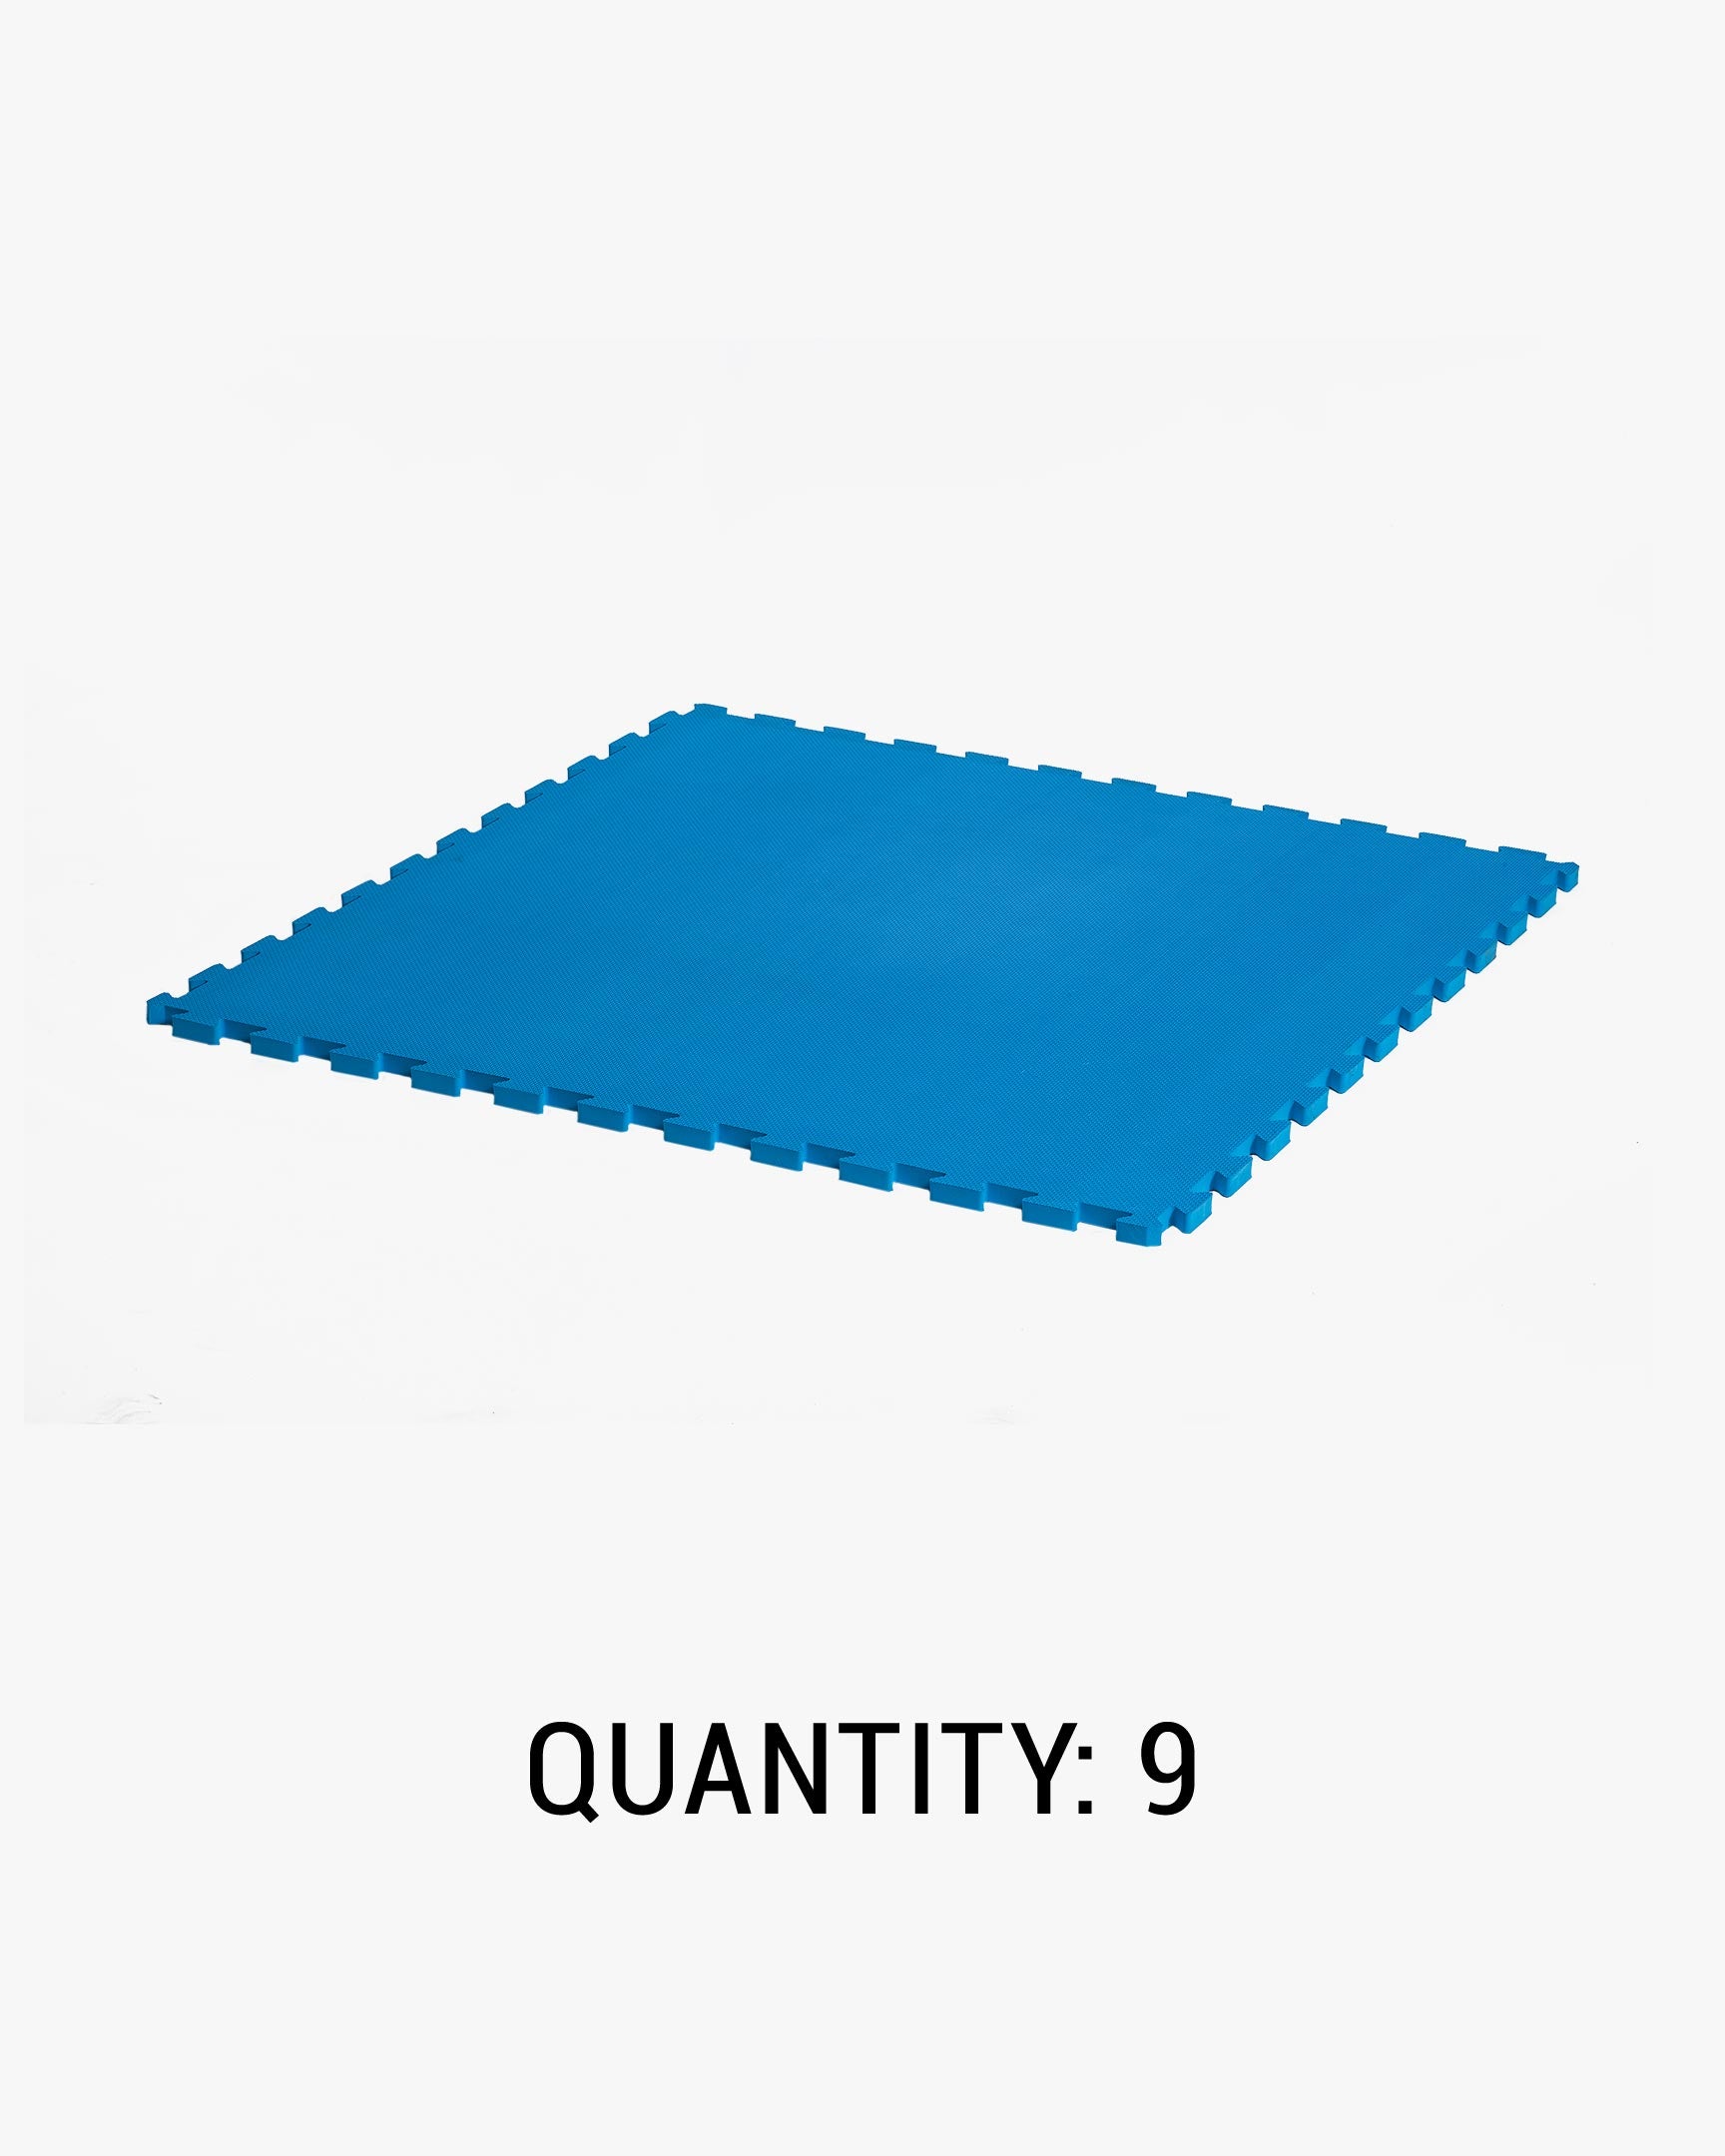 Century Reversible Puzzle Mat Kit - Blue/Black